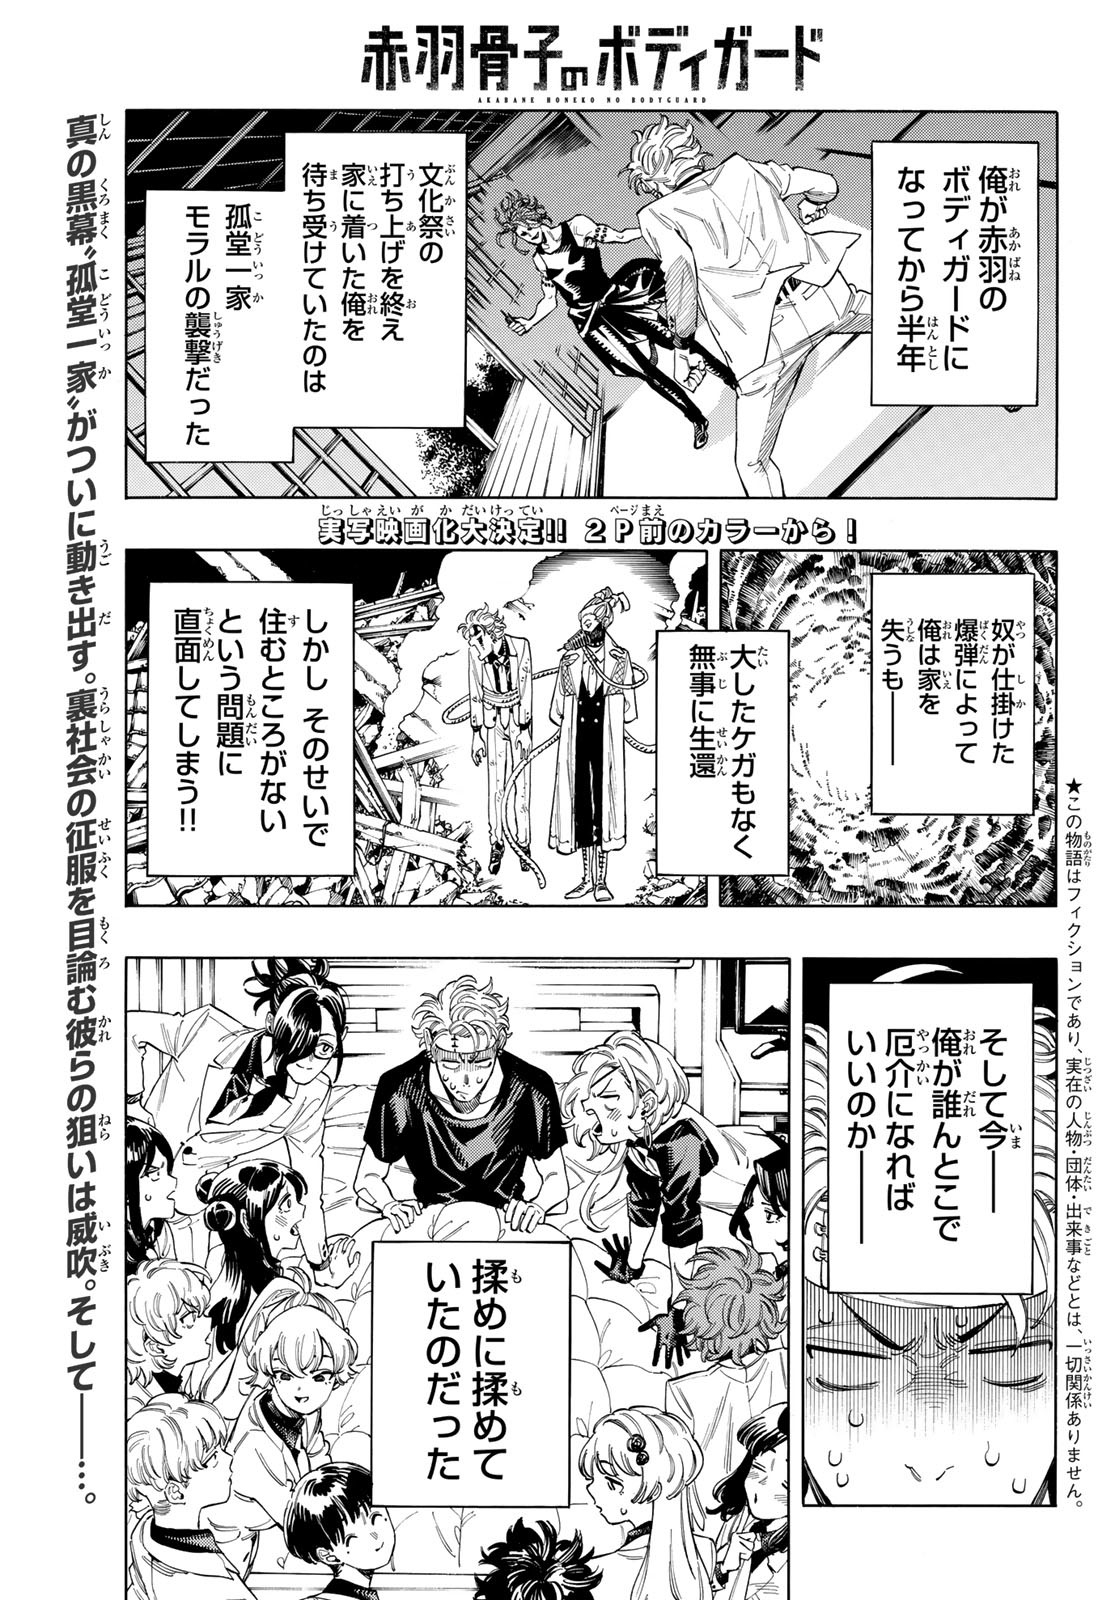 Akabane Honeko no Bodyguard - Chapter 68 - Page 2